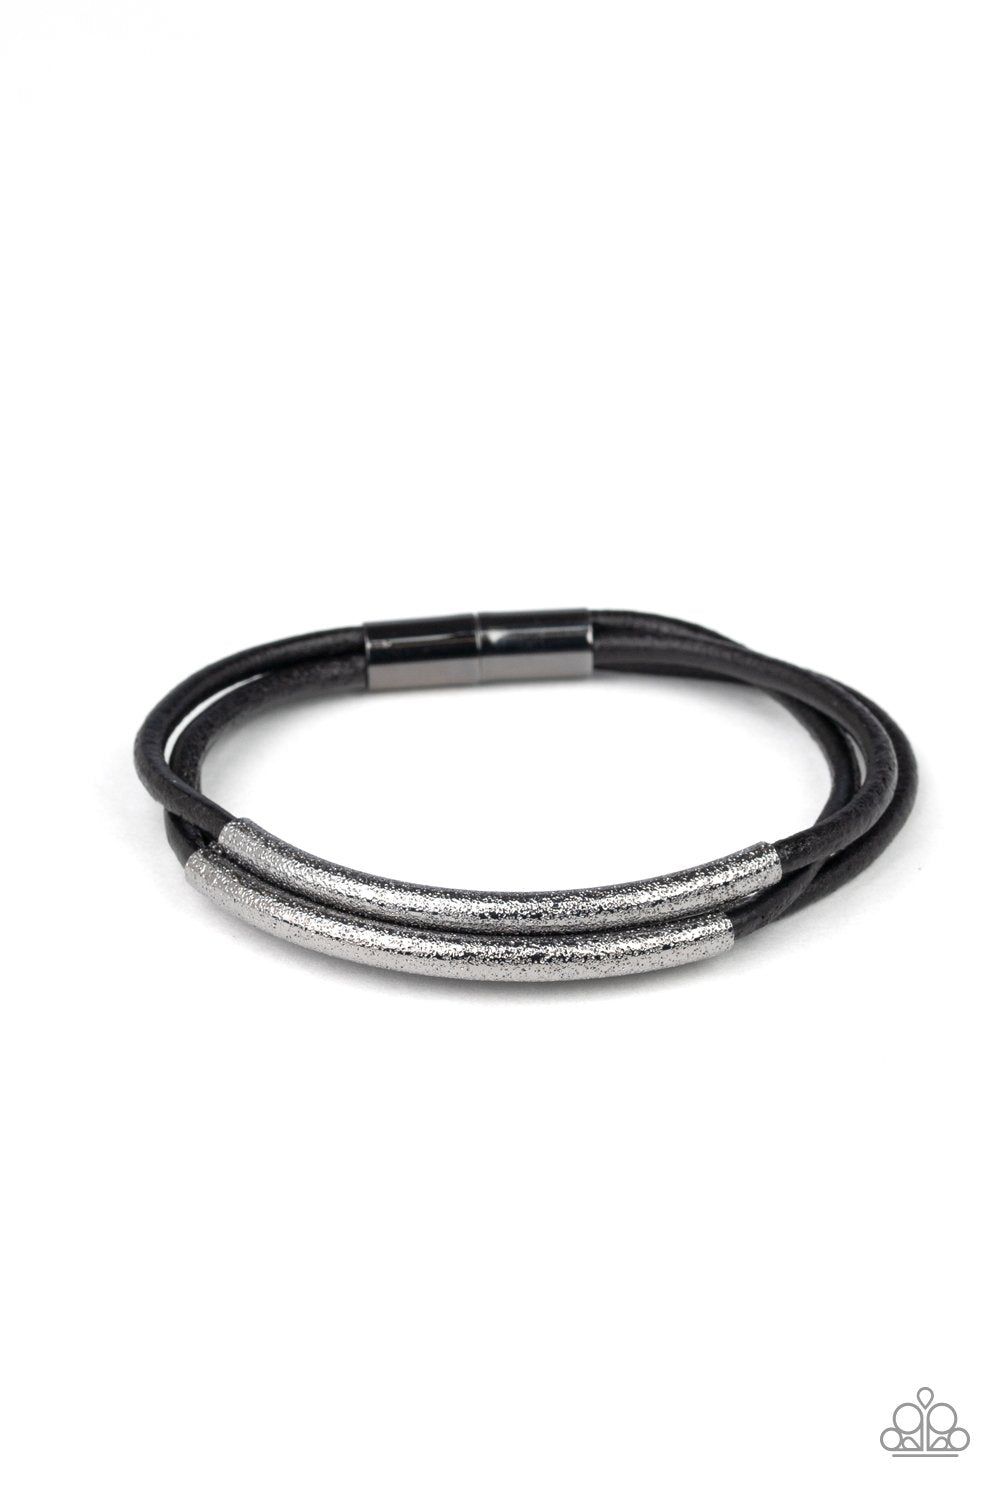 Magnetic Maverick Black and Gunmetal Bracelet - Paparazzi Accessories-CarasShop.com - $5 Jewelry by Cara Jewels